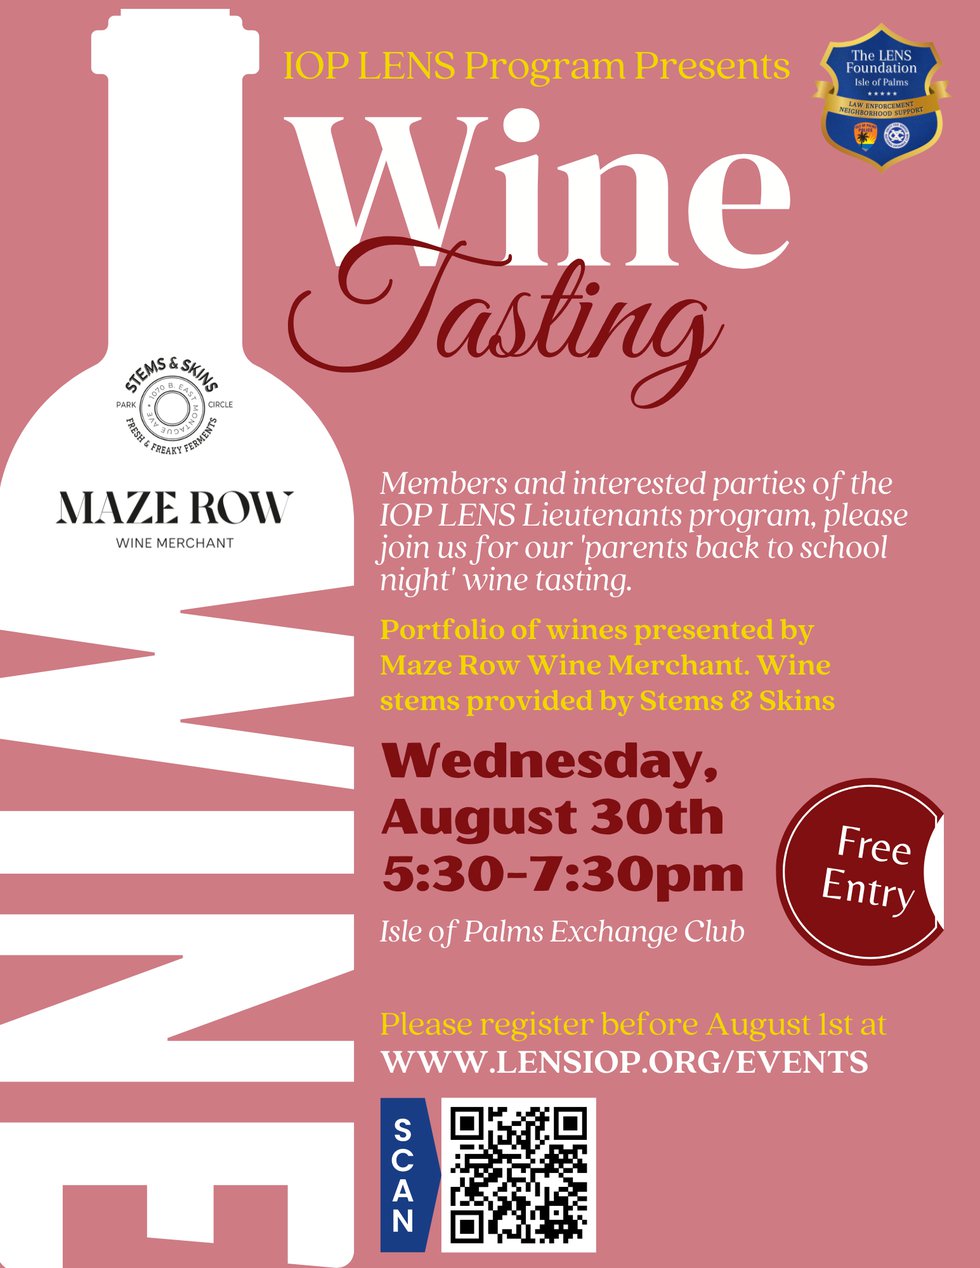 LENS wine tasting event - wine tasting event August 30th